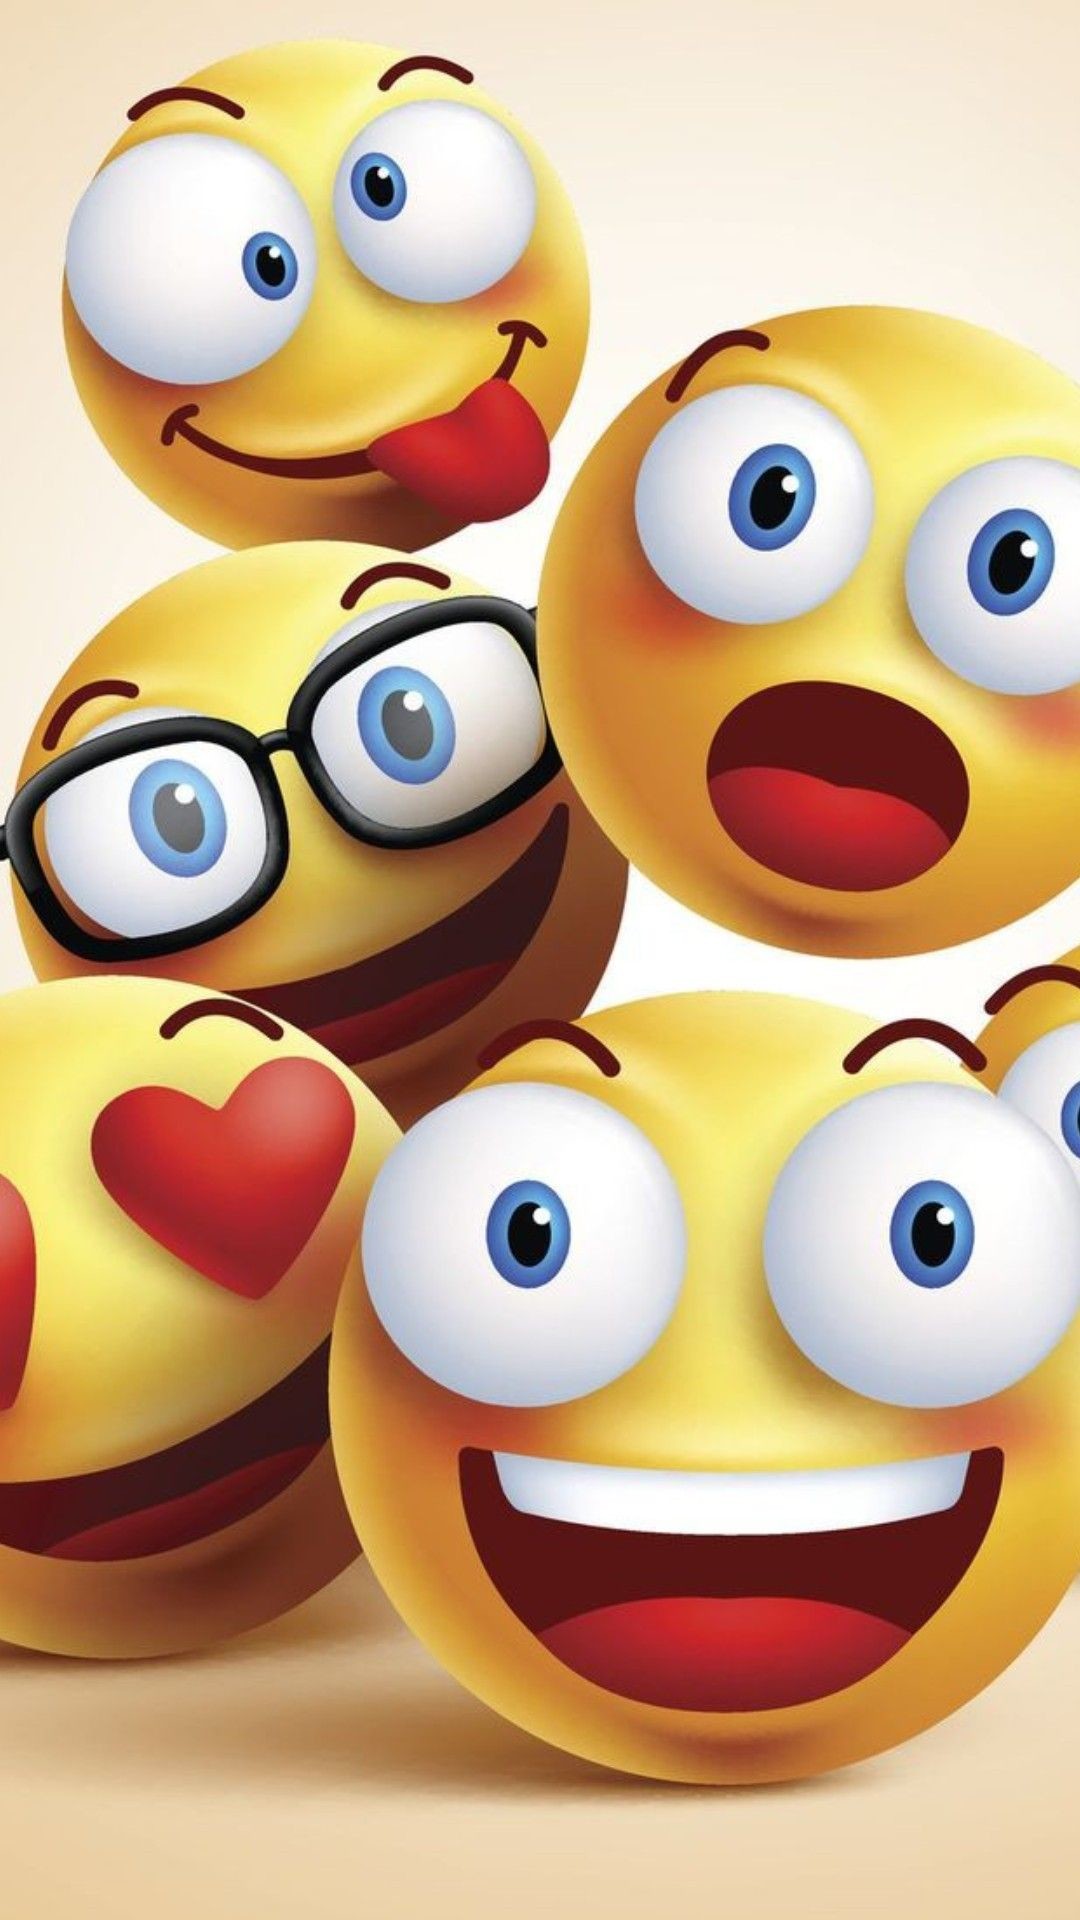 1080x1920 Emoji Wallpaper Emojis Emoji Wallpaper Iphone Emoji | Porn ...